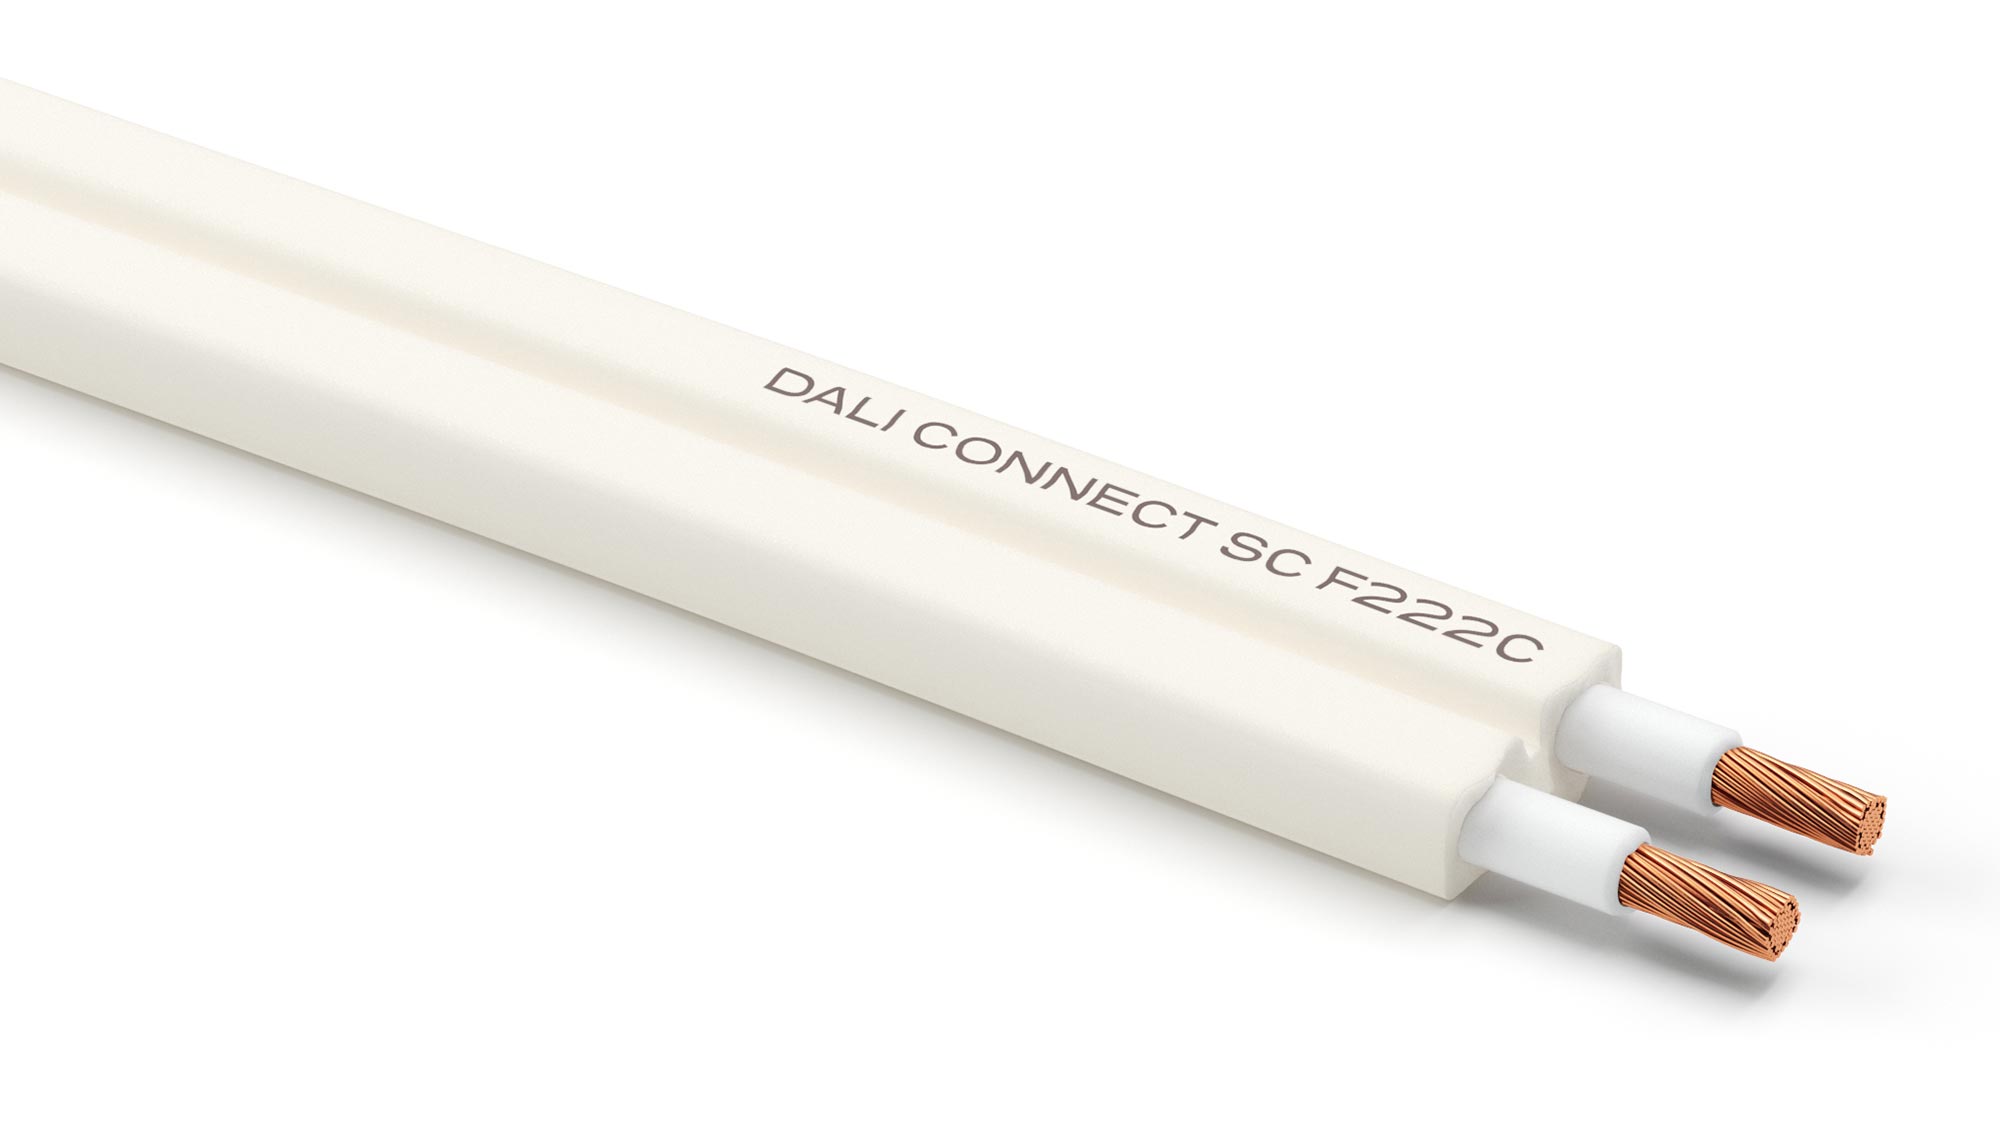 DALI CONNECT SC F222C Kabel